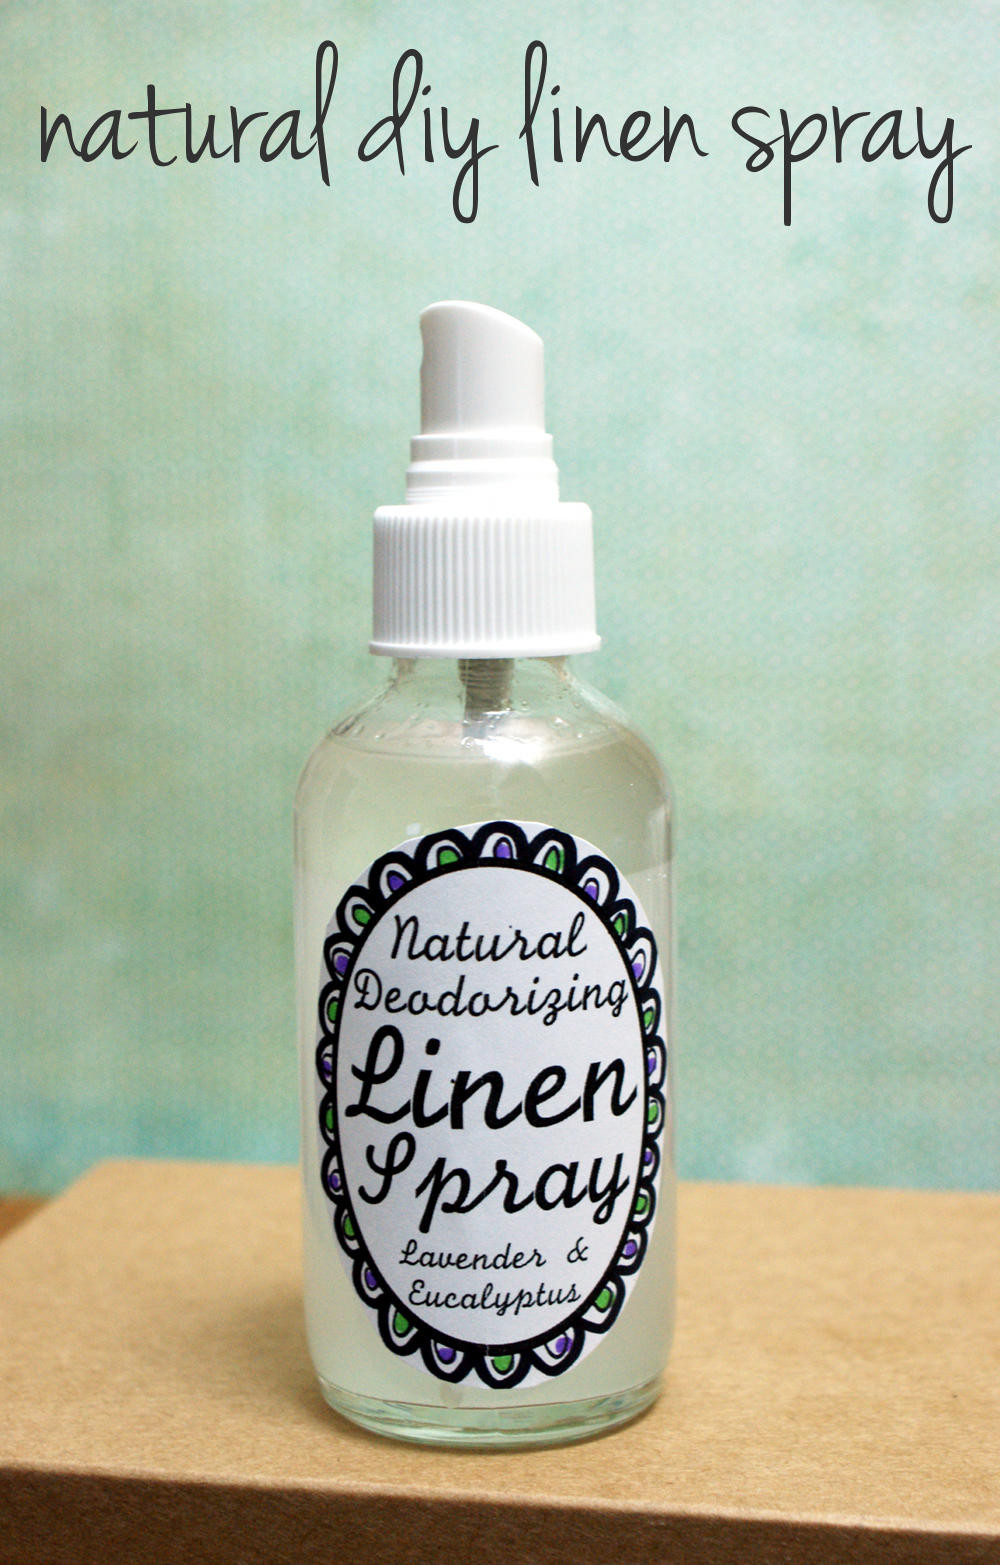 Best ideas about DIY Linen Spray
. Save or Pin Deodorizing Homemade Lavender Linen Spray Recipe Now.